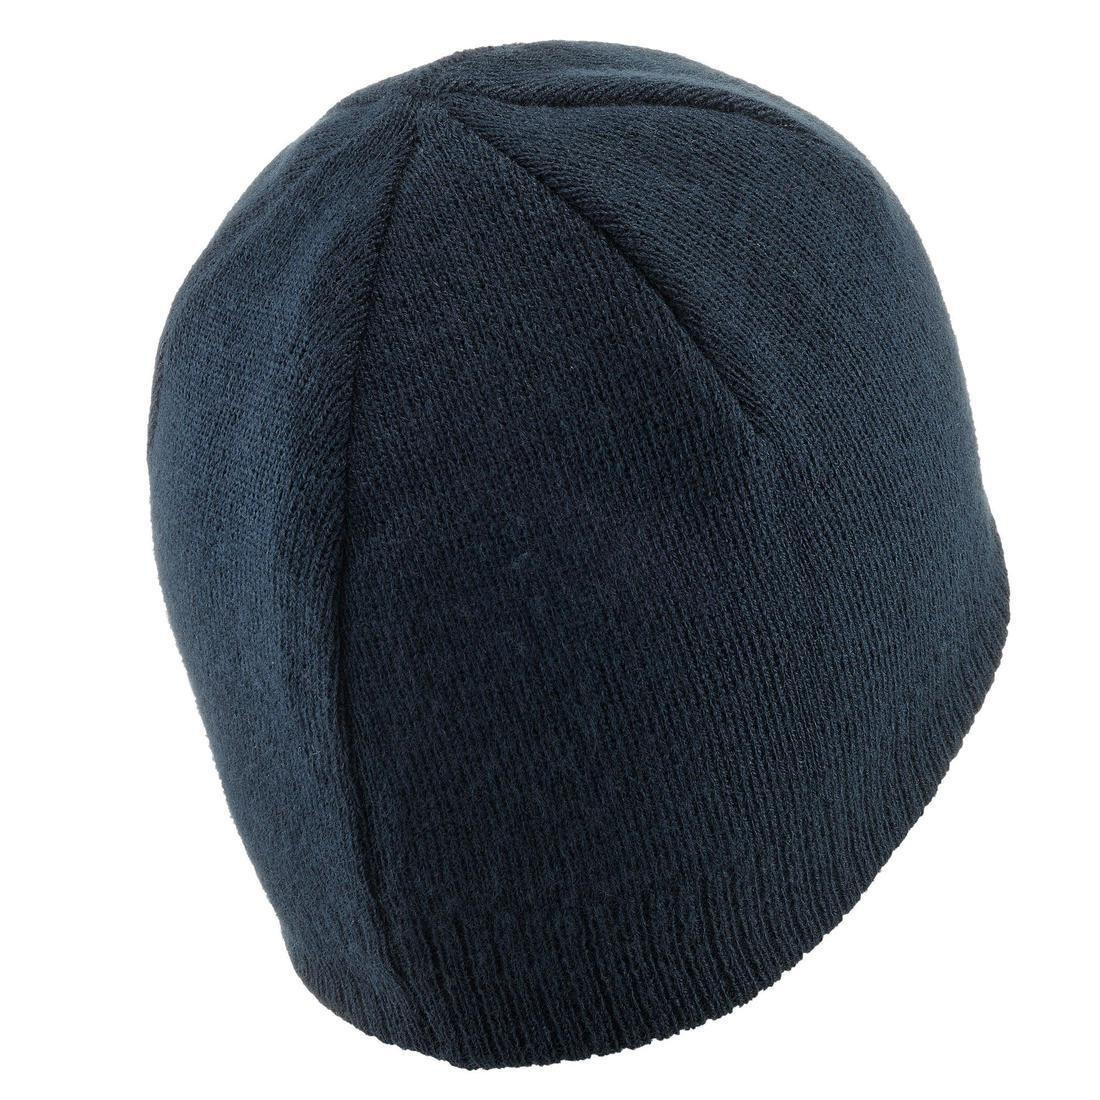 WEDZE - Ski Hat Simple, Dark Blue